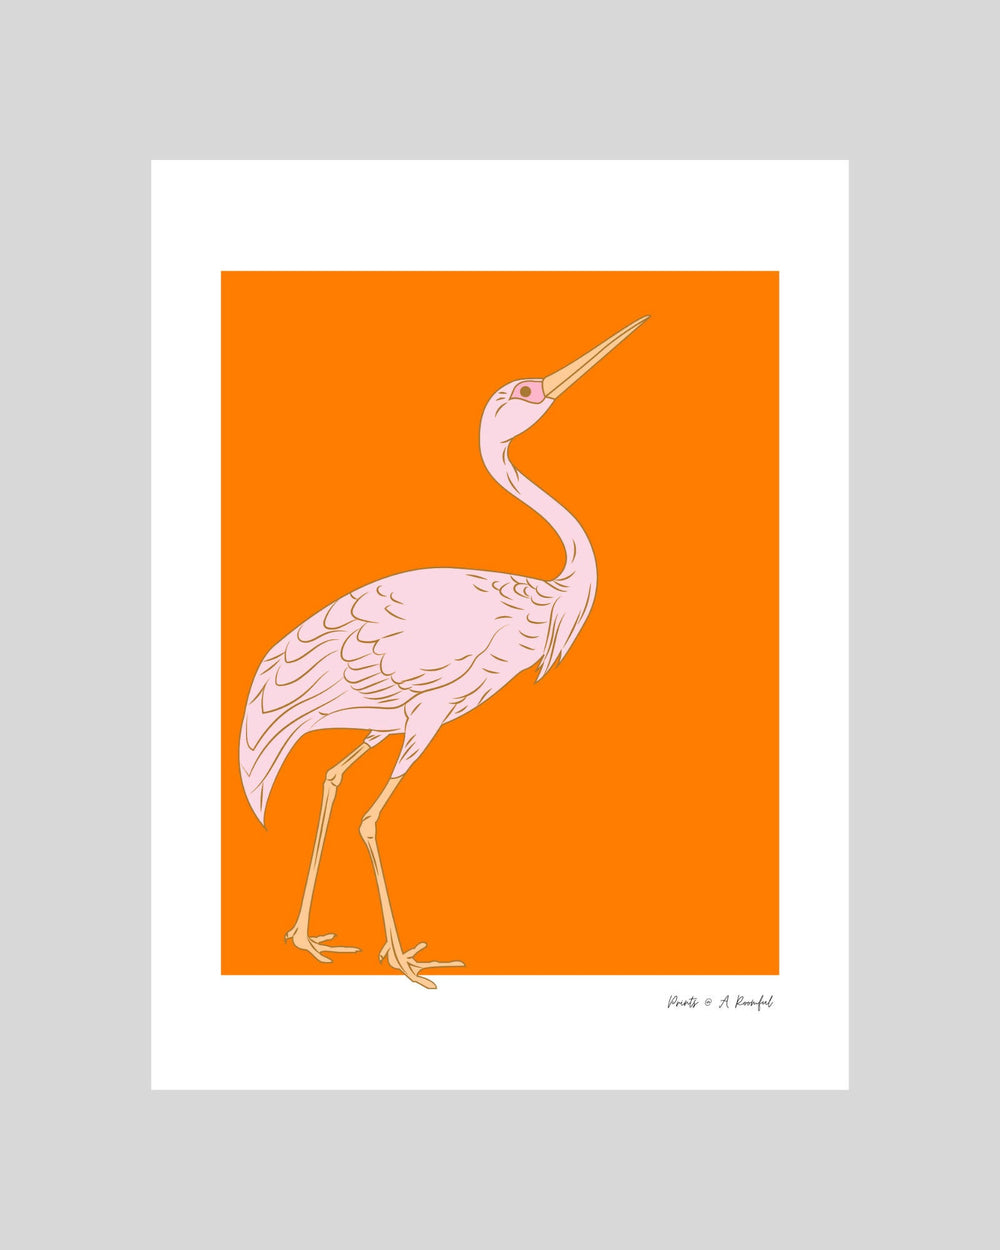 wall art : cranes (orange background) Art Prints@ARoomful 